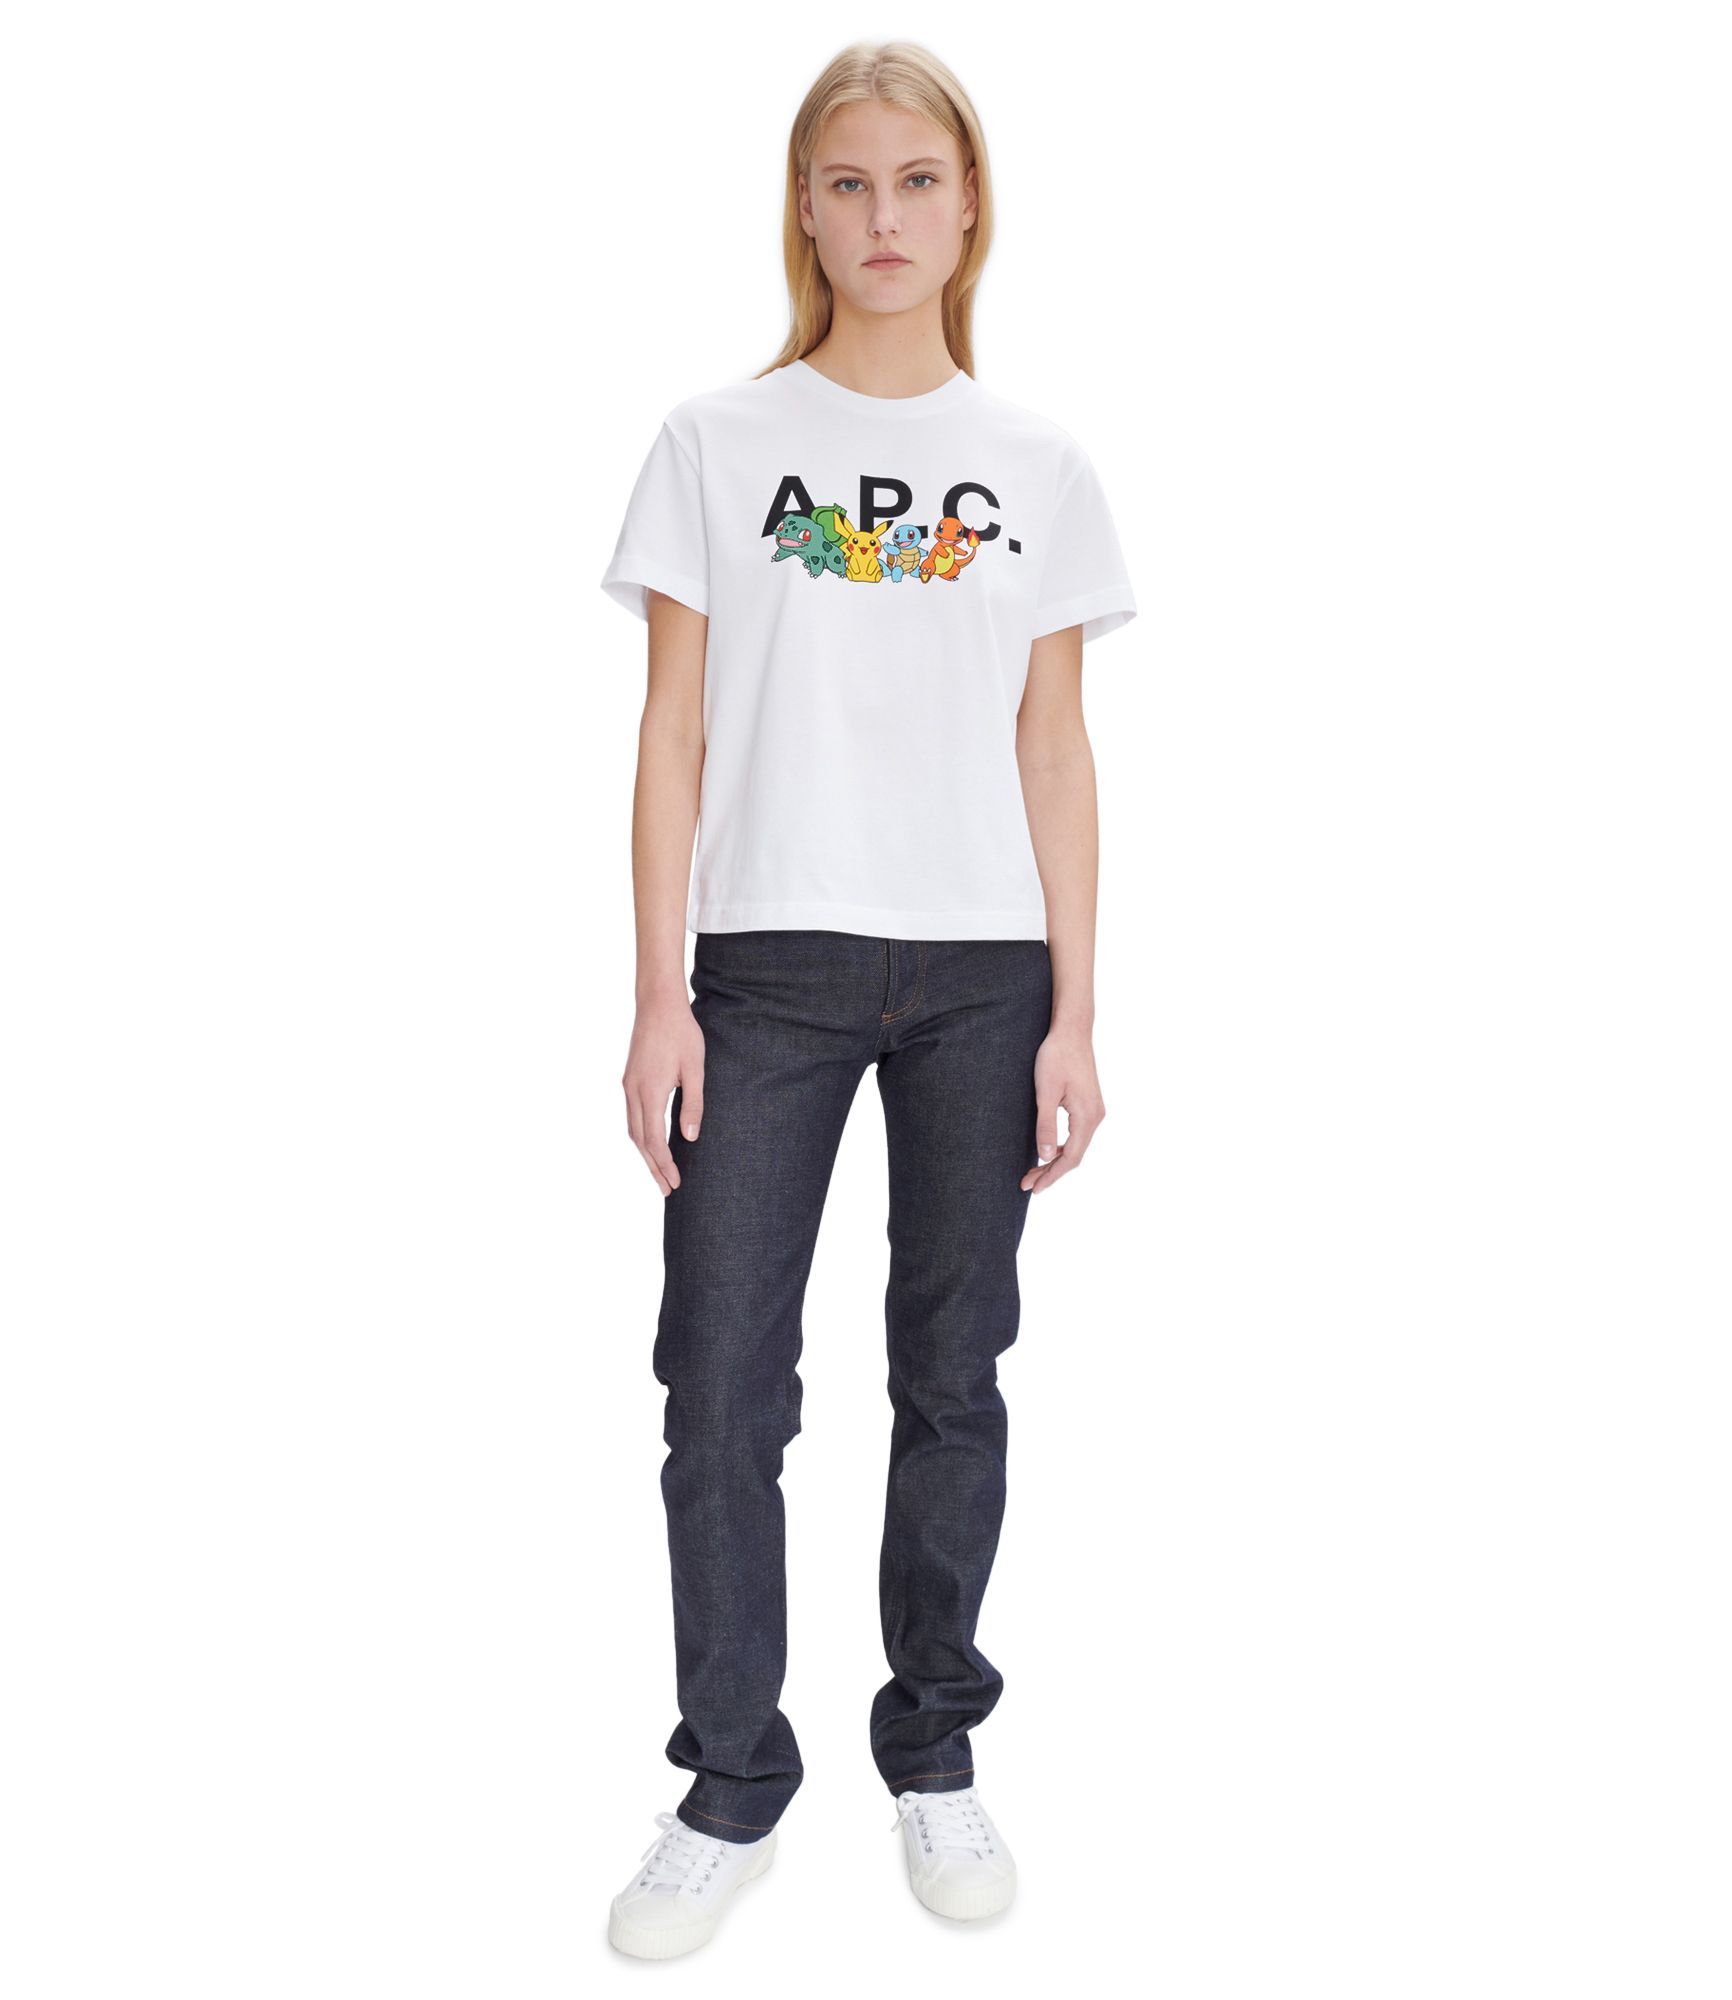 A.P.C 아페쎄 포켓몬 The 크루 F 티셔츠 WHITE울랄라 편집샵